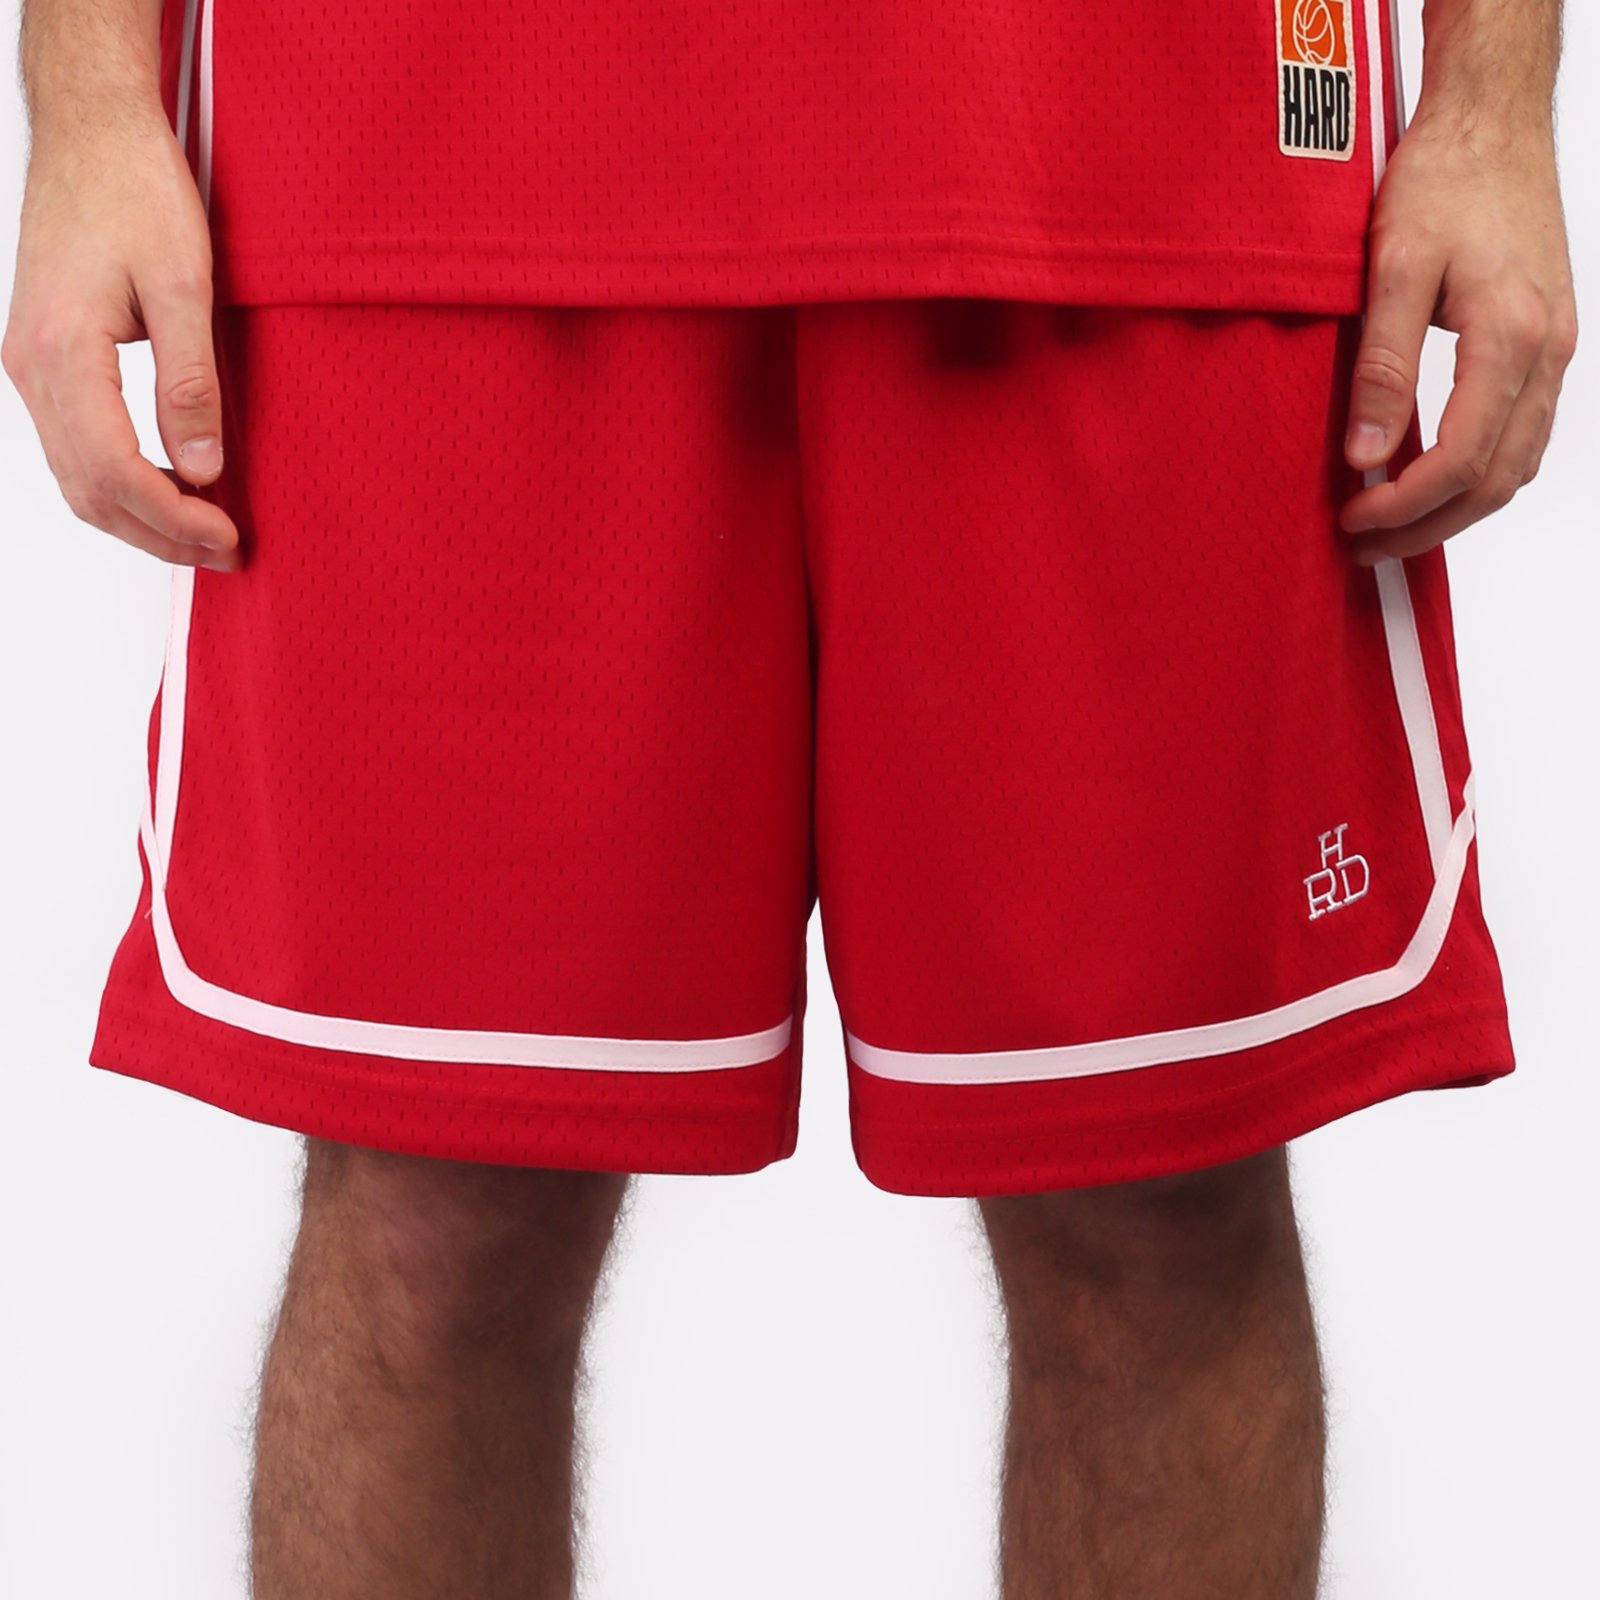 мужские красные шорты Hard Teammate Teammate short-red/wht - цена, описание, фото 1